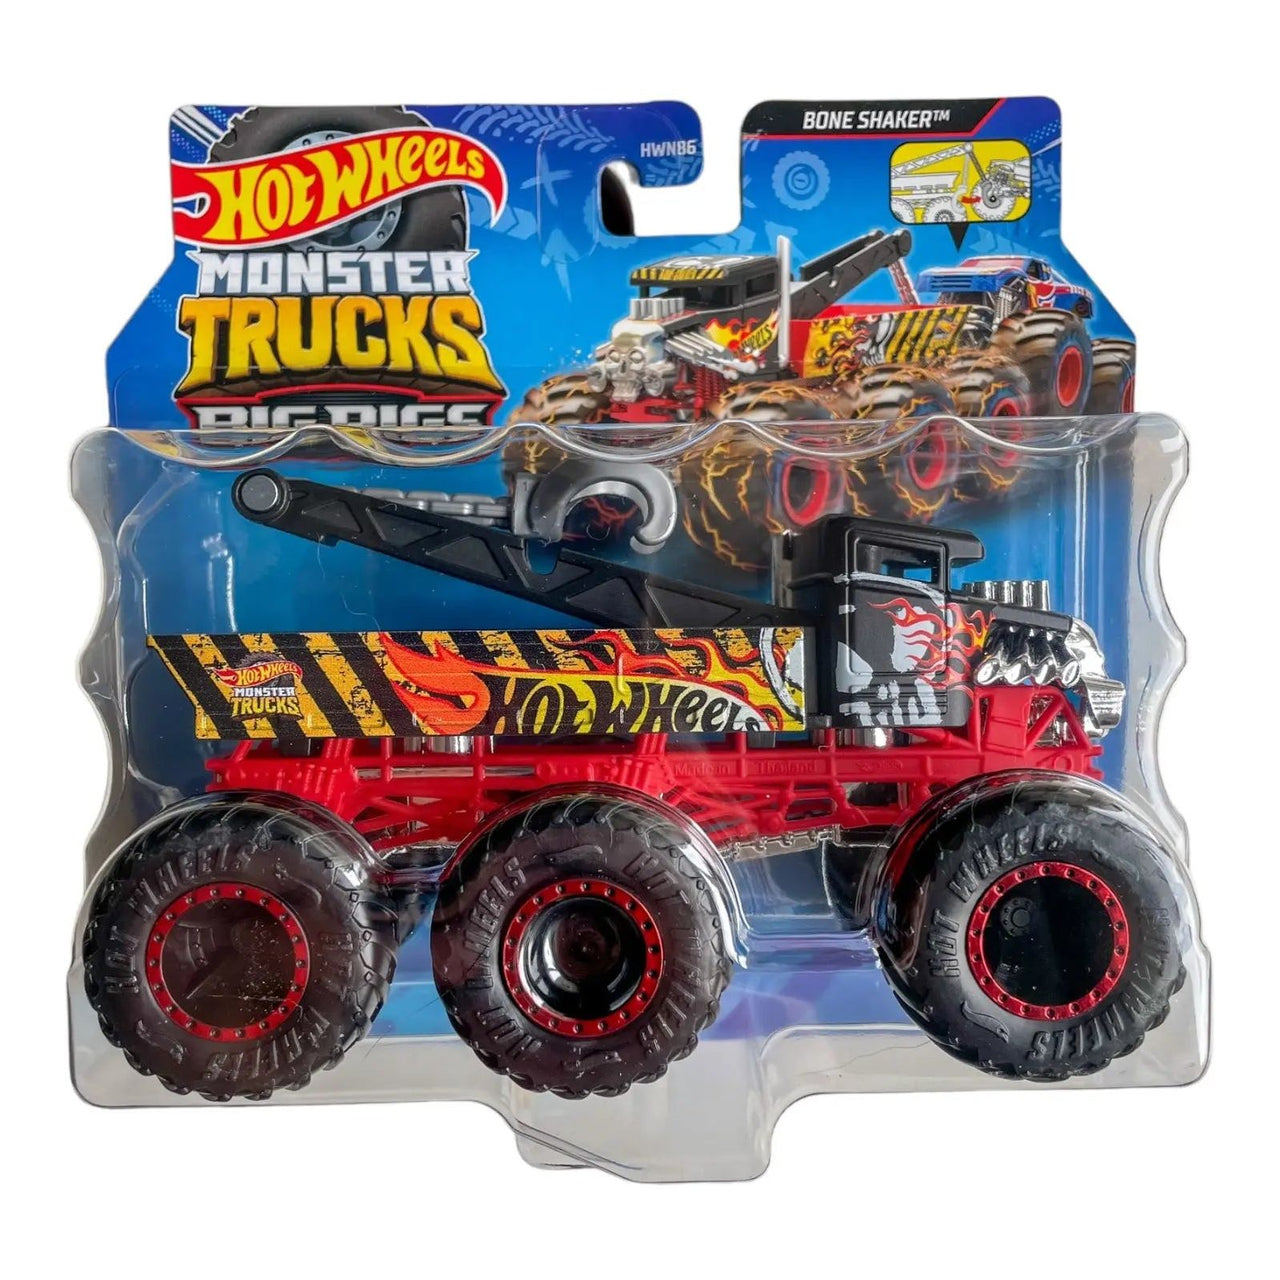 Hot Wheels Monster Truck Big Rigs Bone Shaker Hot Wheels